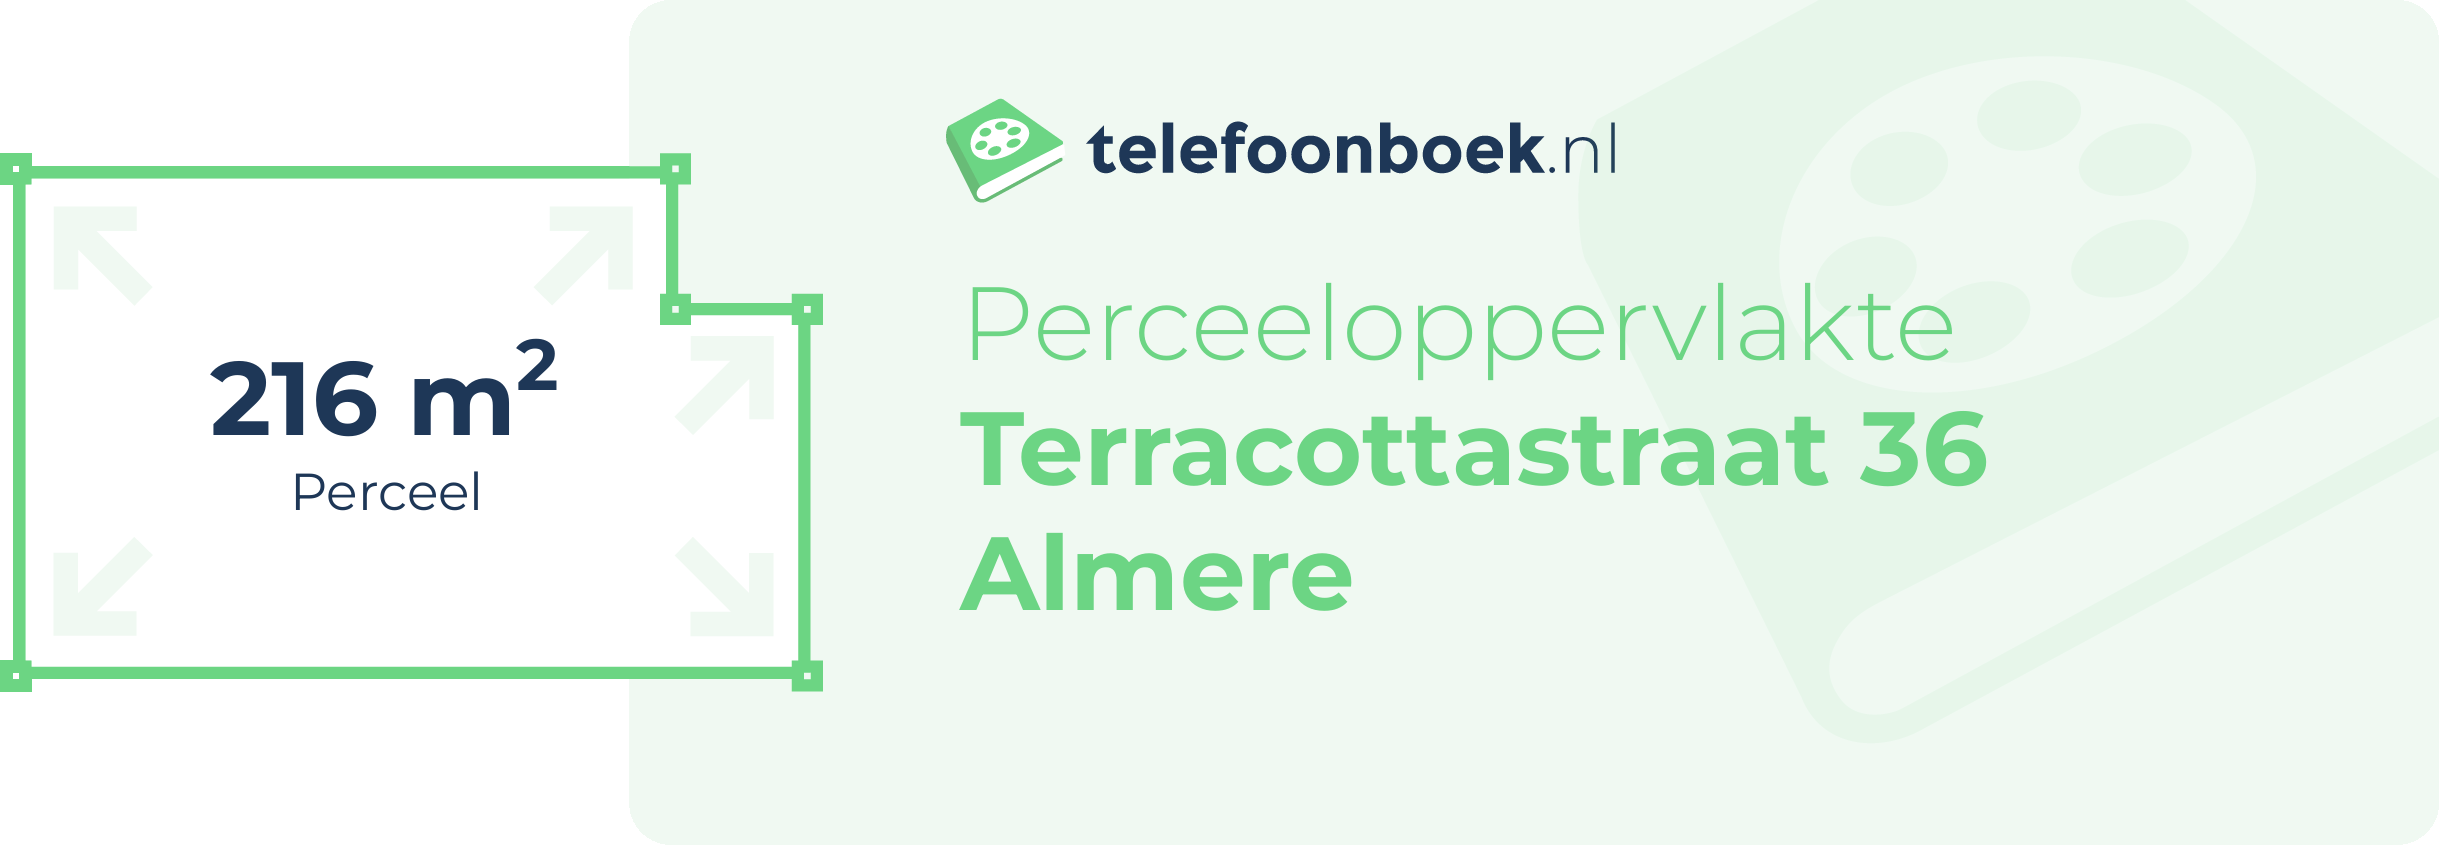 Perceeloppervlakte Terracottastraat 36 Almere